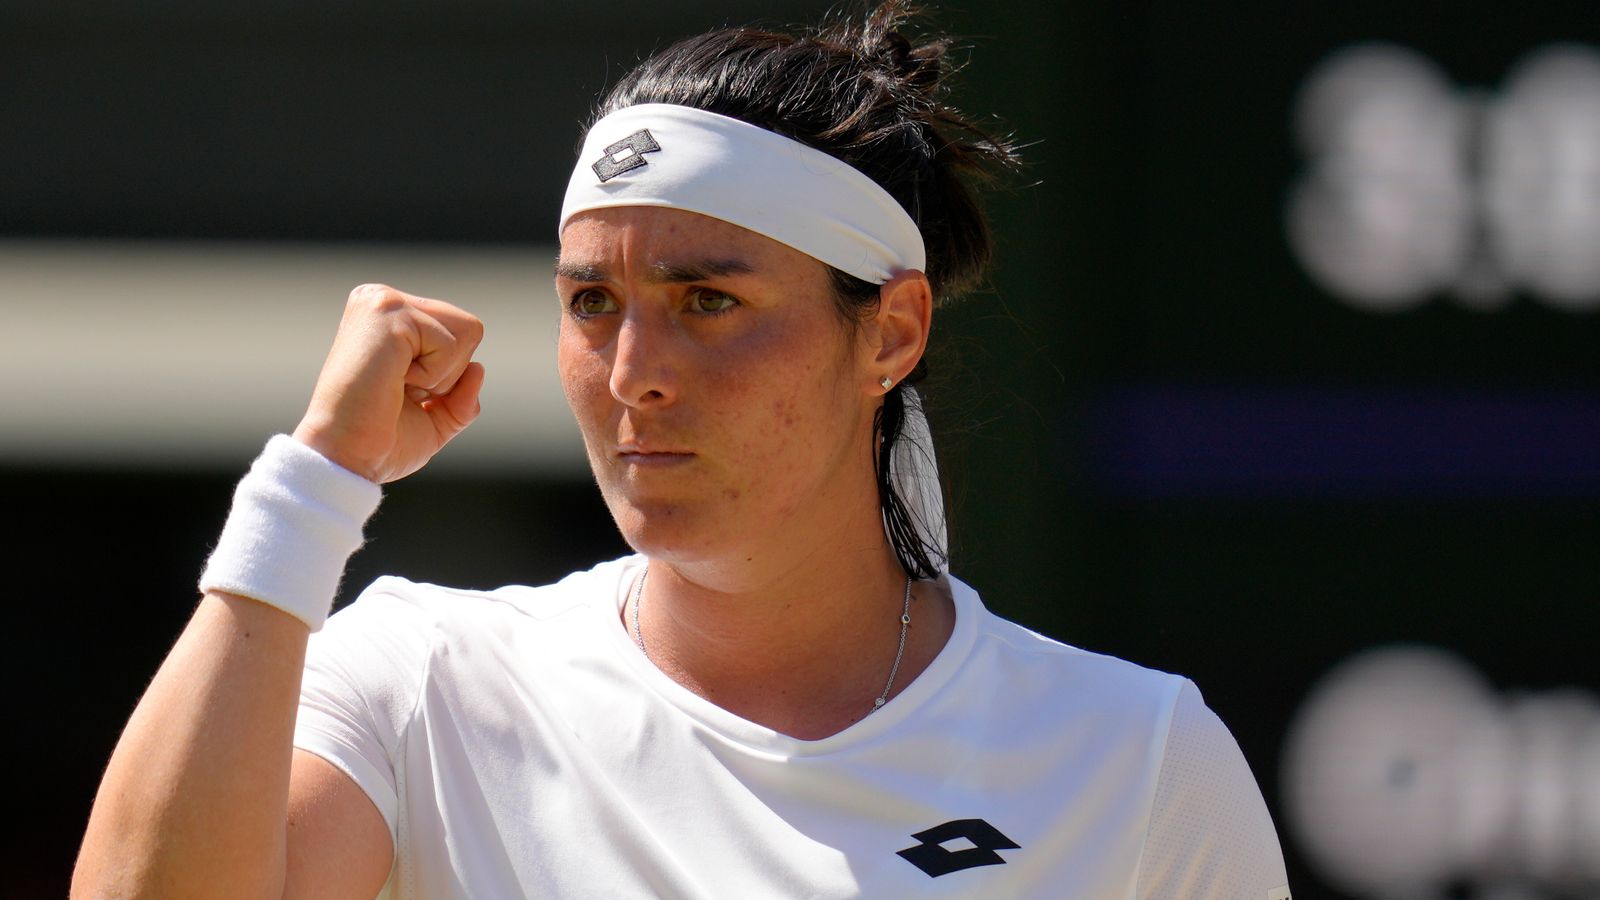 Wimbledon Ons Jabeur defeats Tatjana Maria to reach her maiden Grand Slam final Tennis News Sky Sports